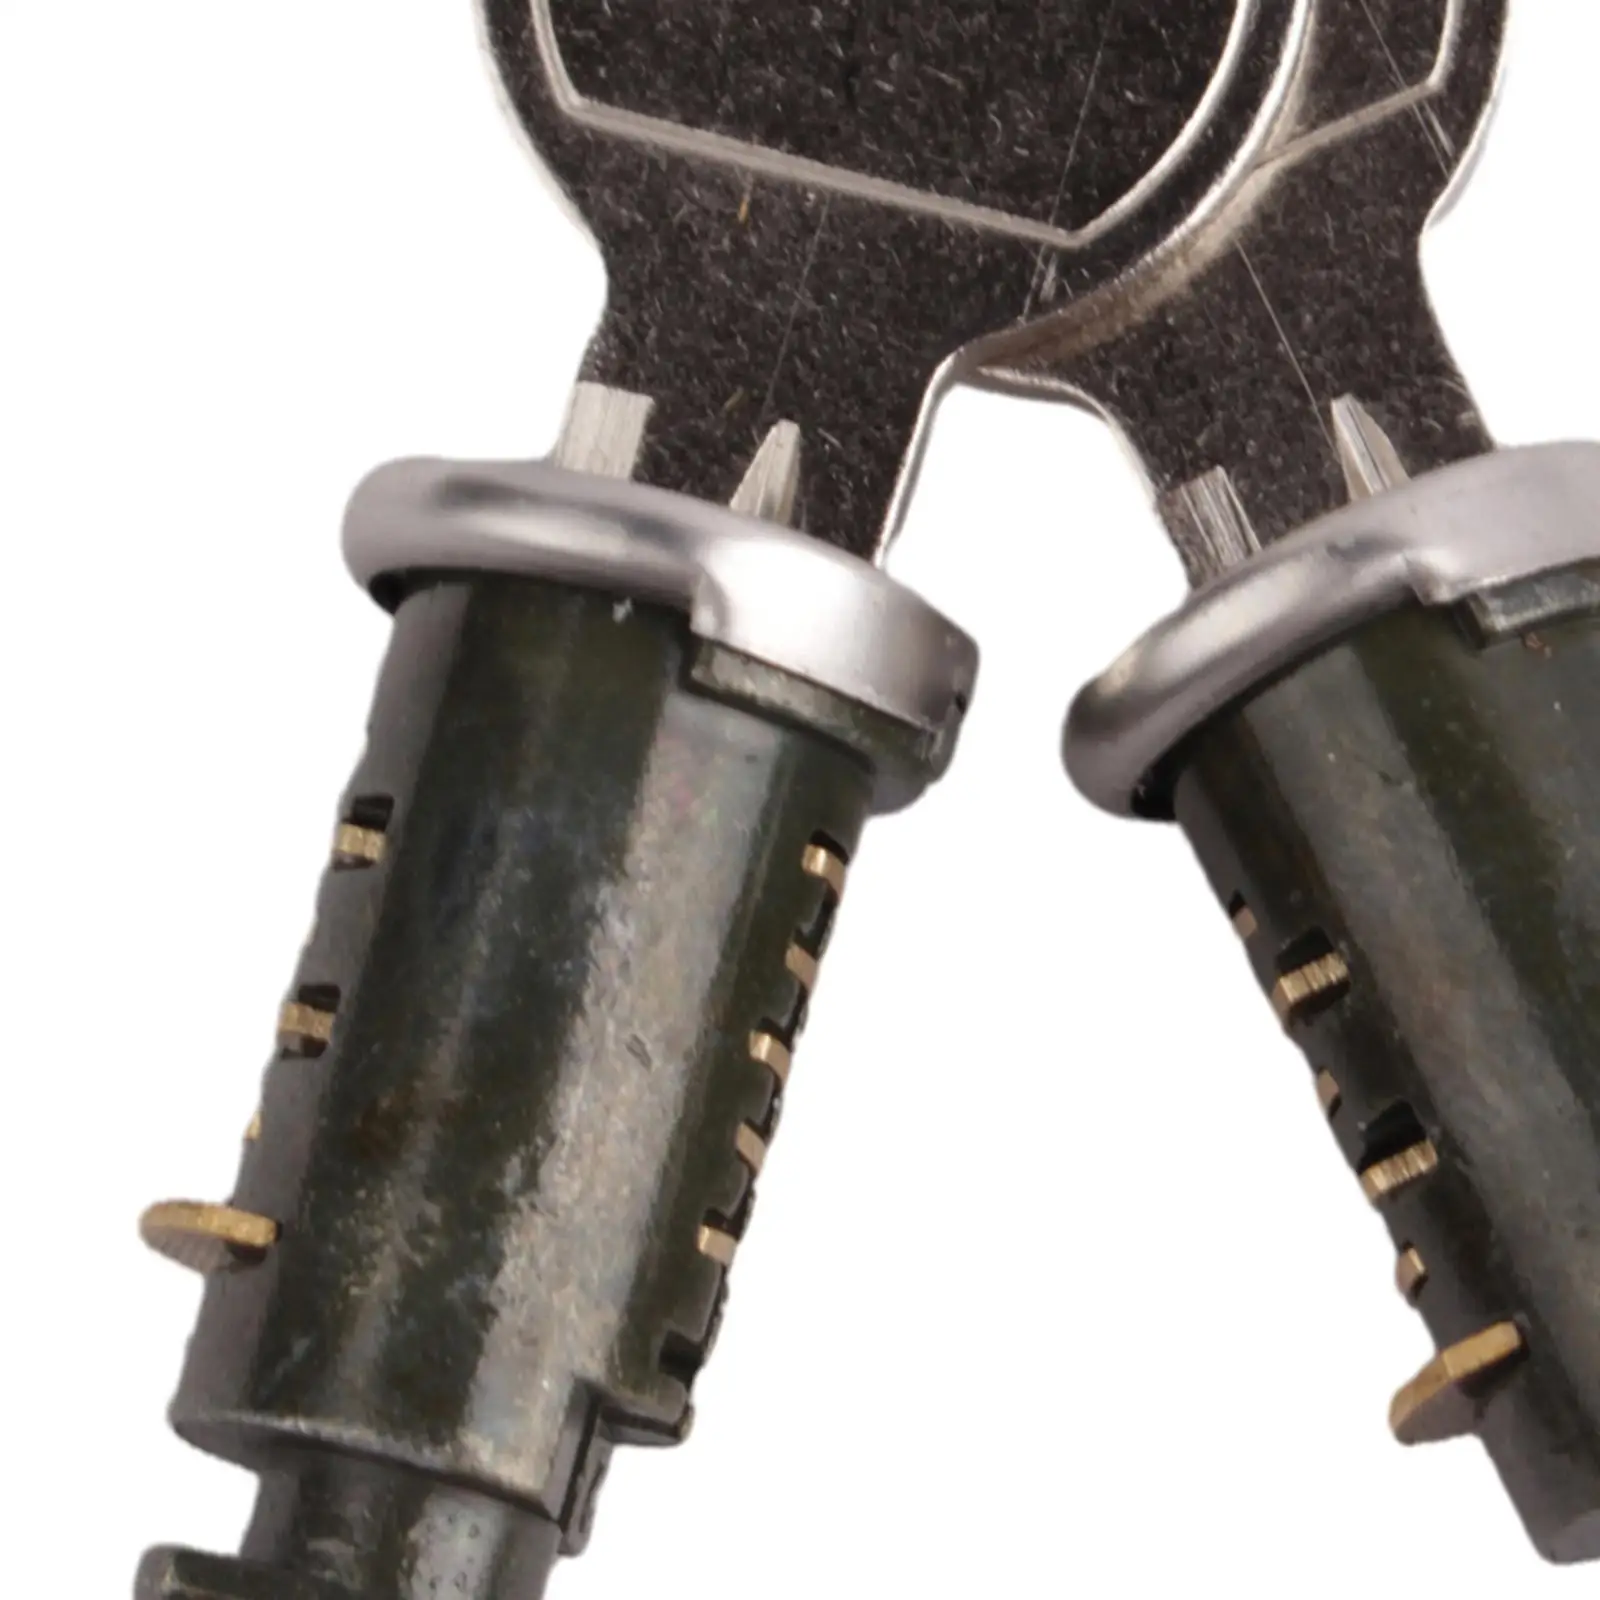 Lock Cylinders for Car Racks System Detachable Car Rack Parts Locks Keys Professional Lock Core for SUV Car Rack Locks durable